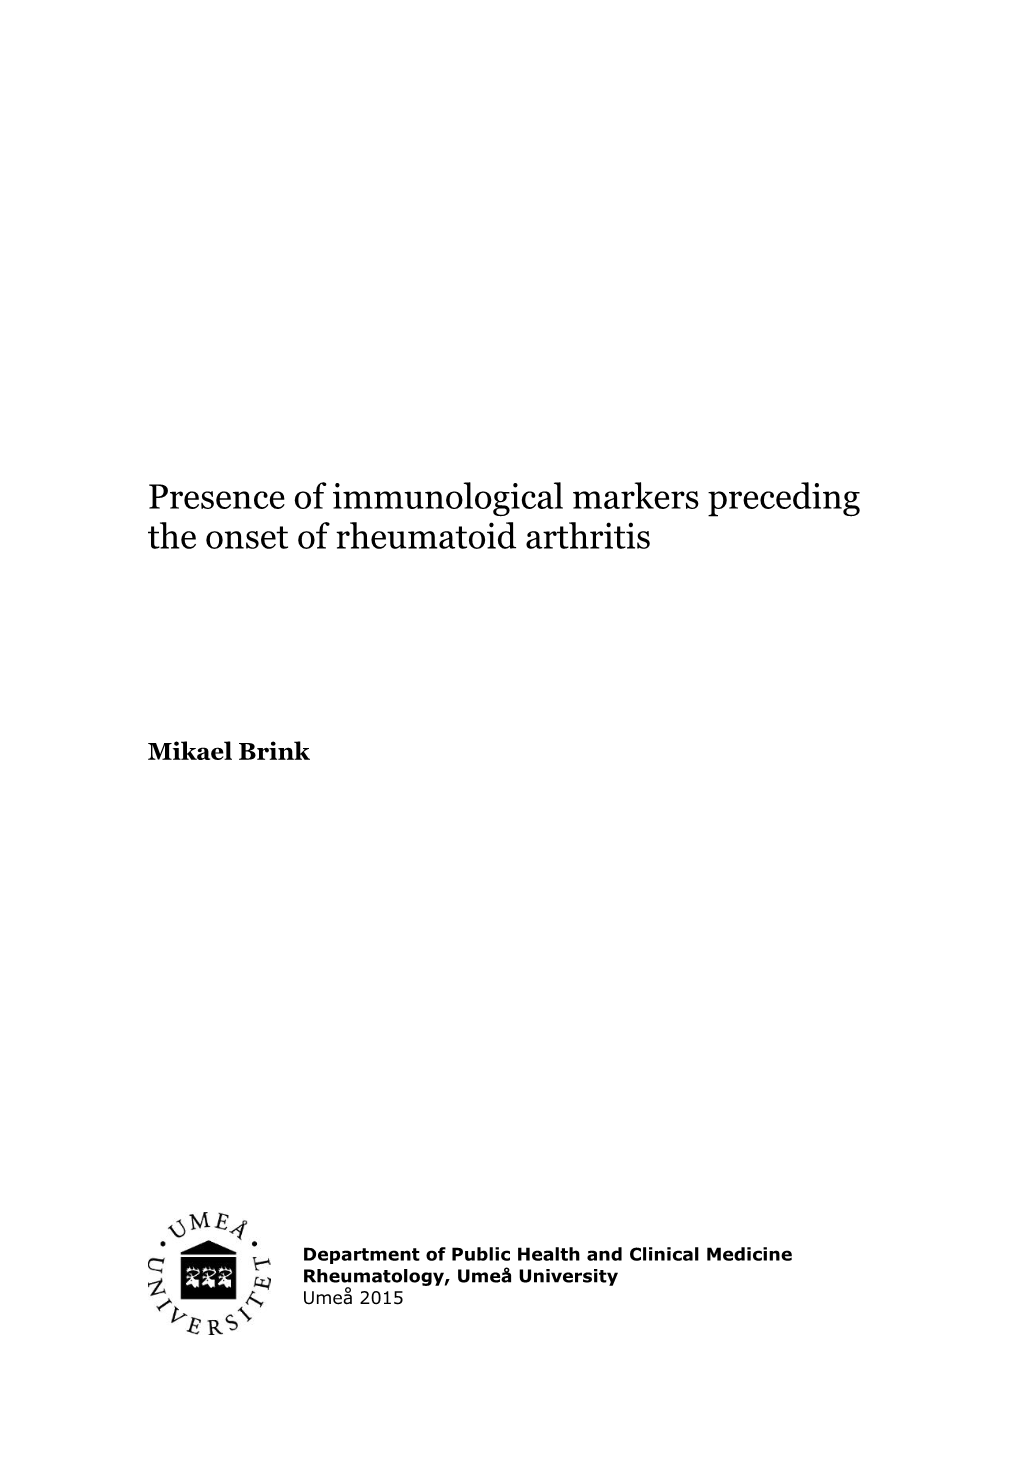 Presence of Immunological Markers Preceding the Onset of Rheumatoid Arthritis